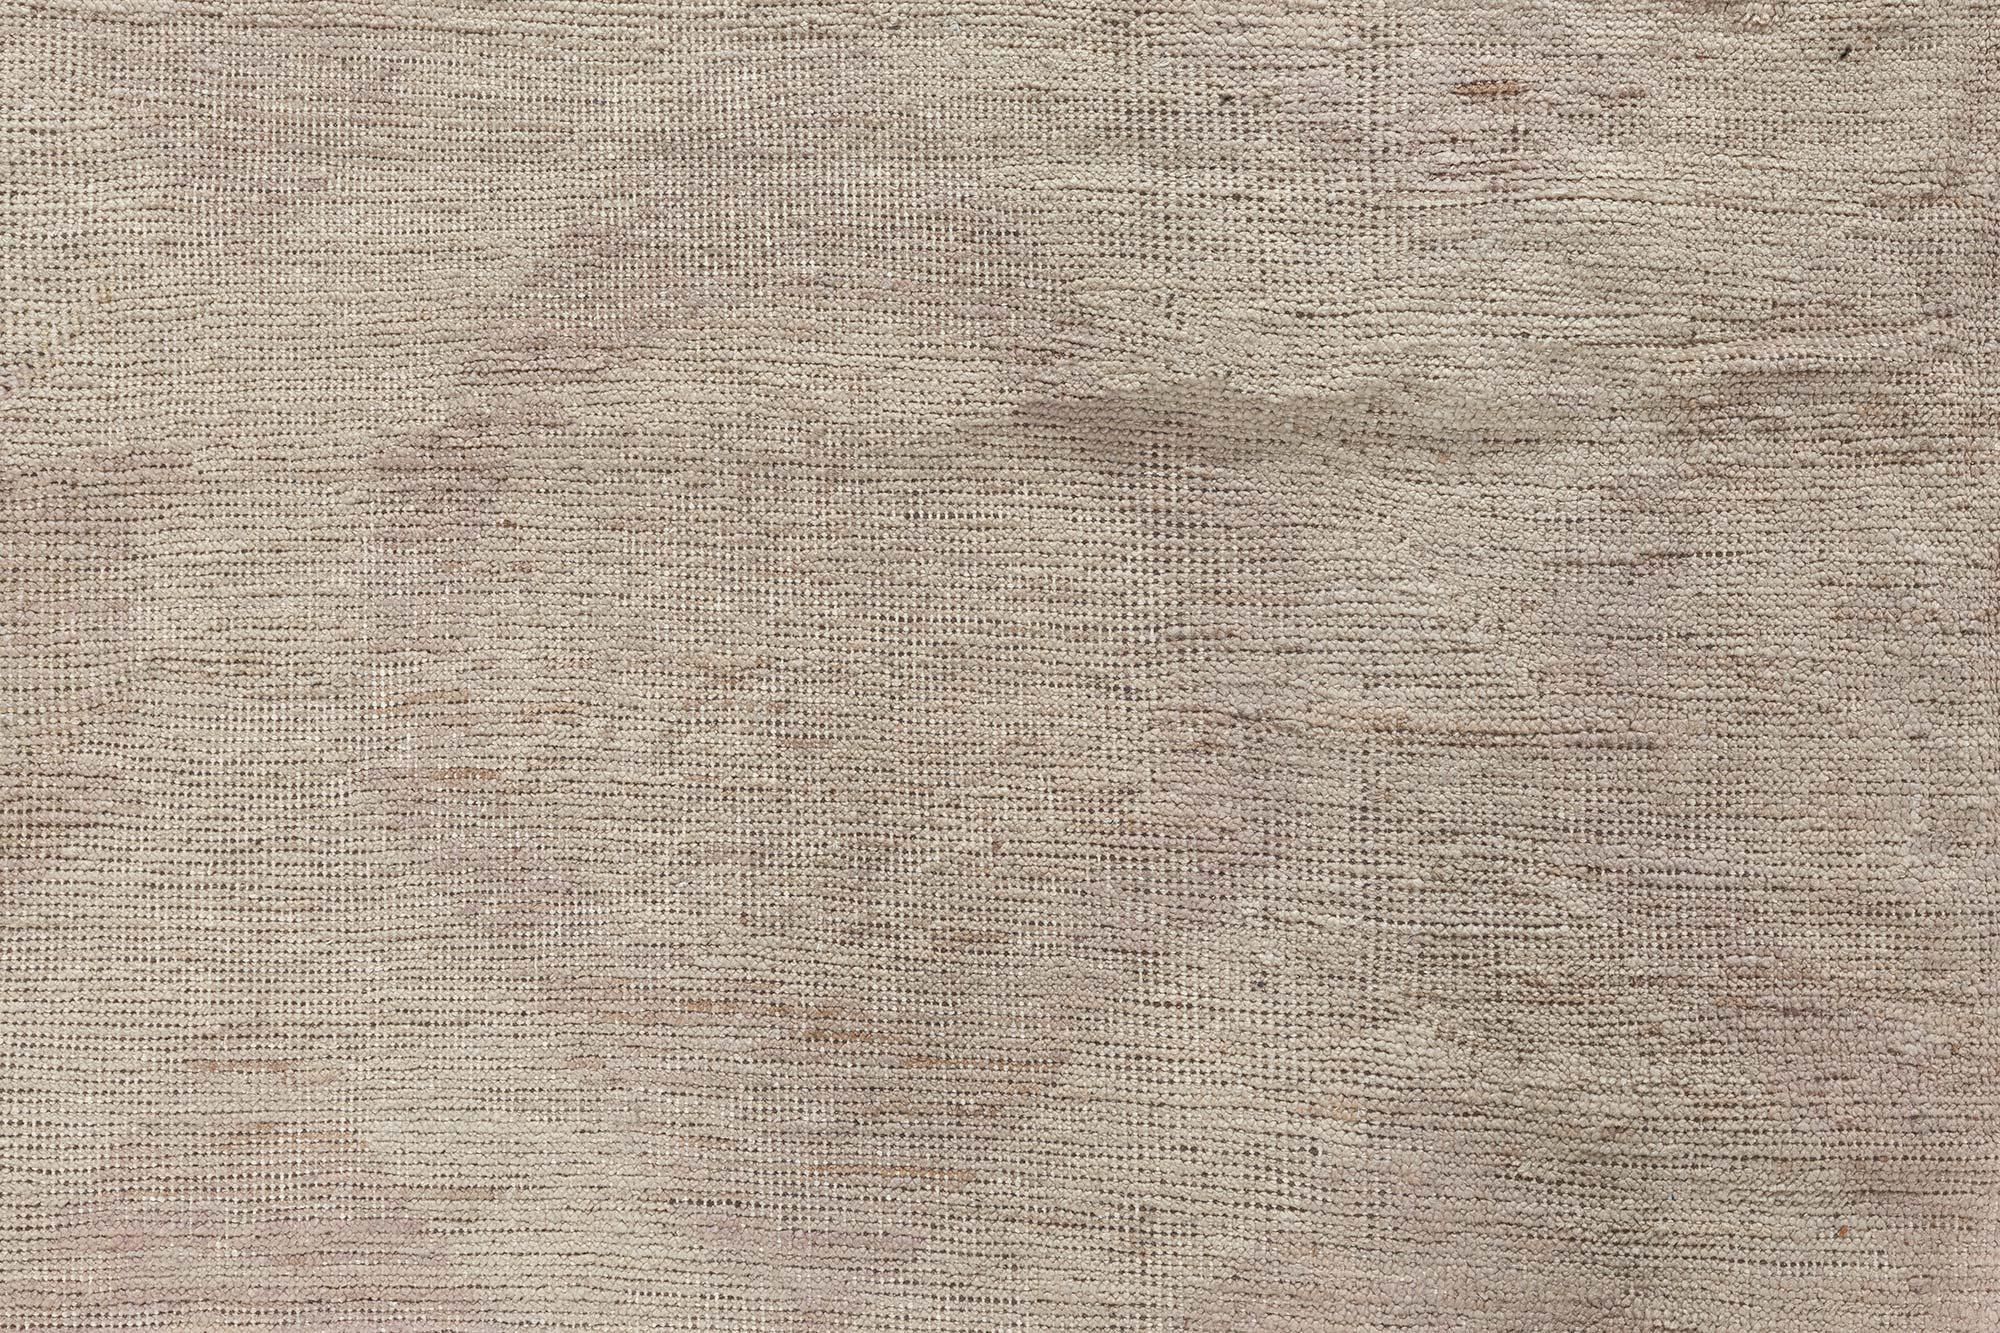 Contemporary Botanic Khotan handmade wool rug by Doris Leslie Blau
Size: 10'0